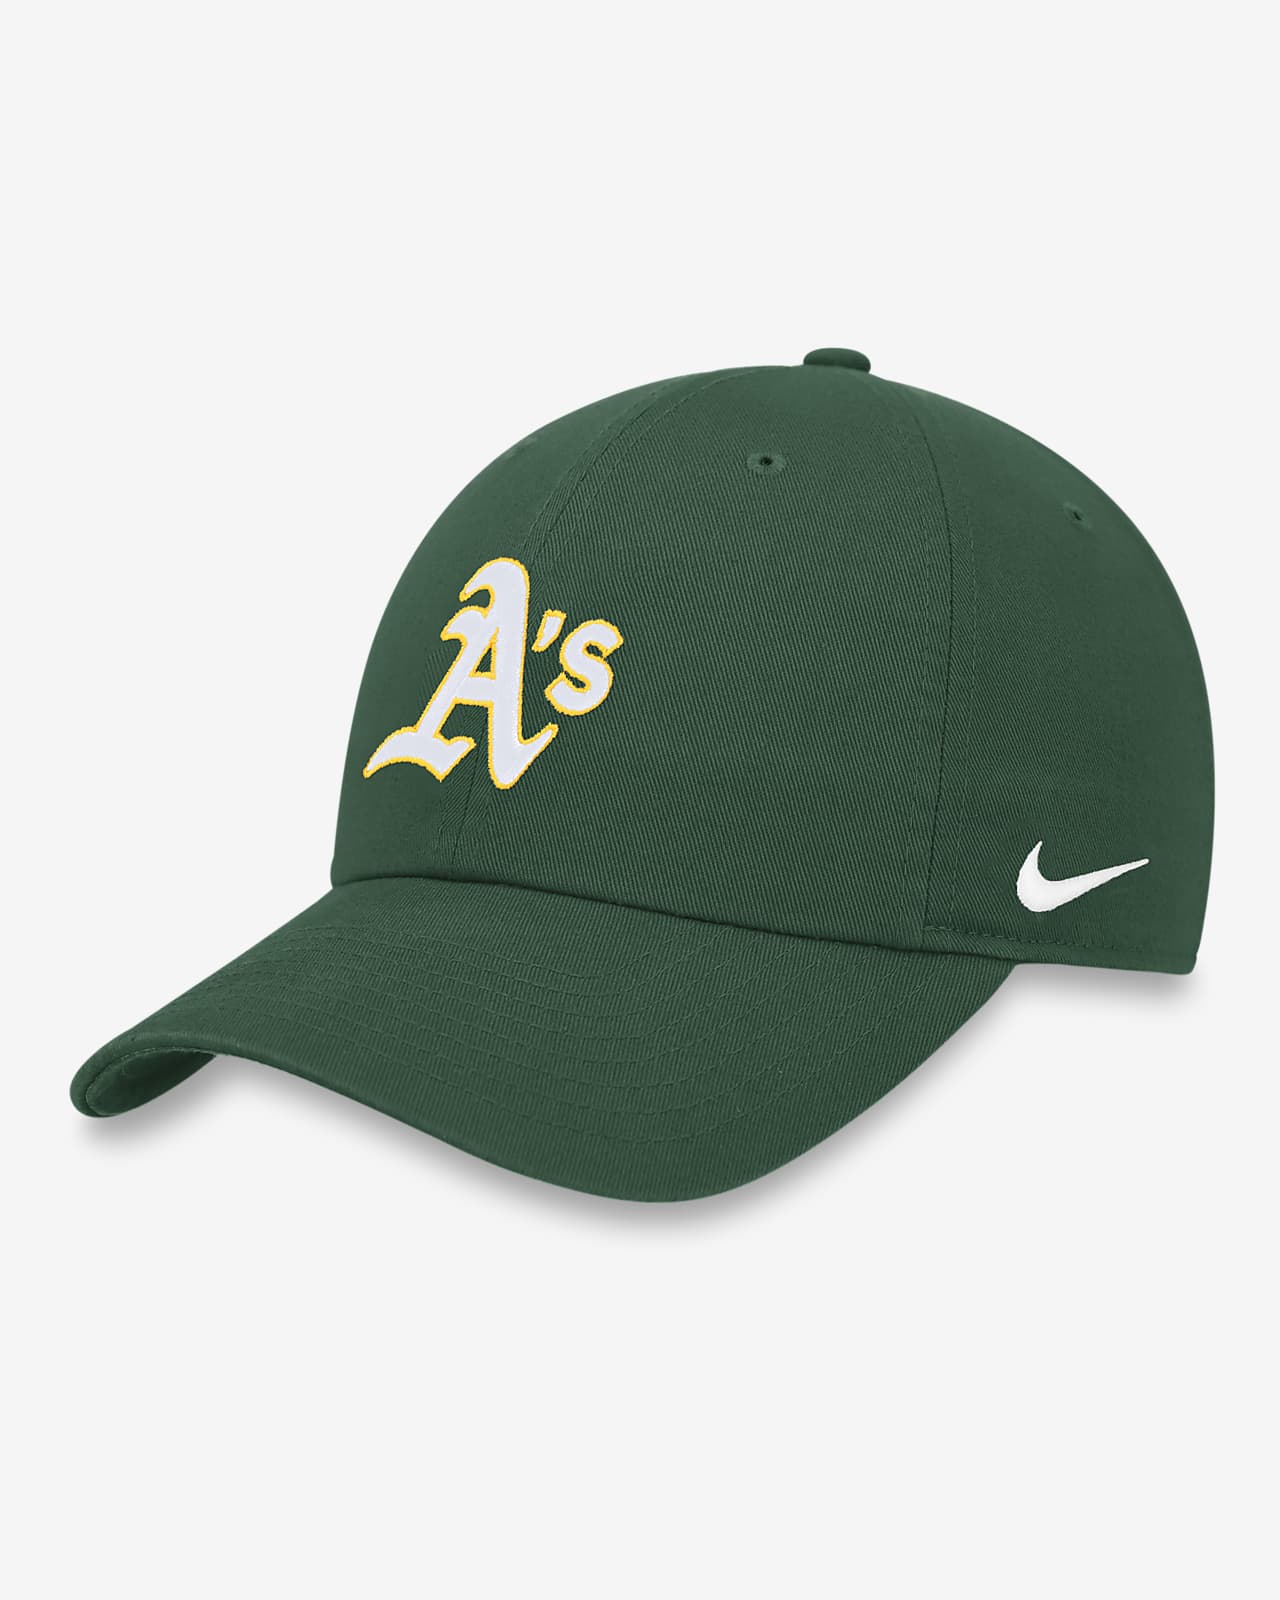 Oakland Athletics Heritage86 Men's Nike MLB Adjustable Hat